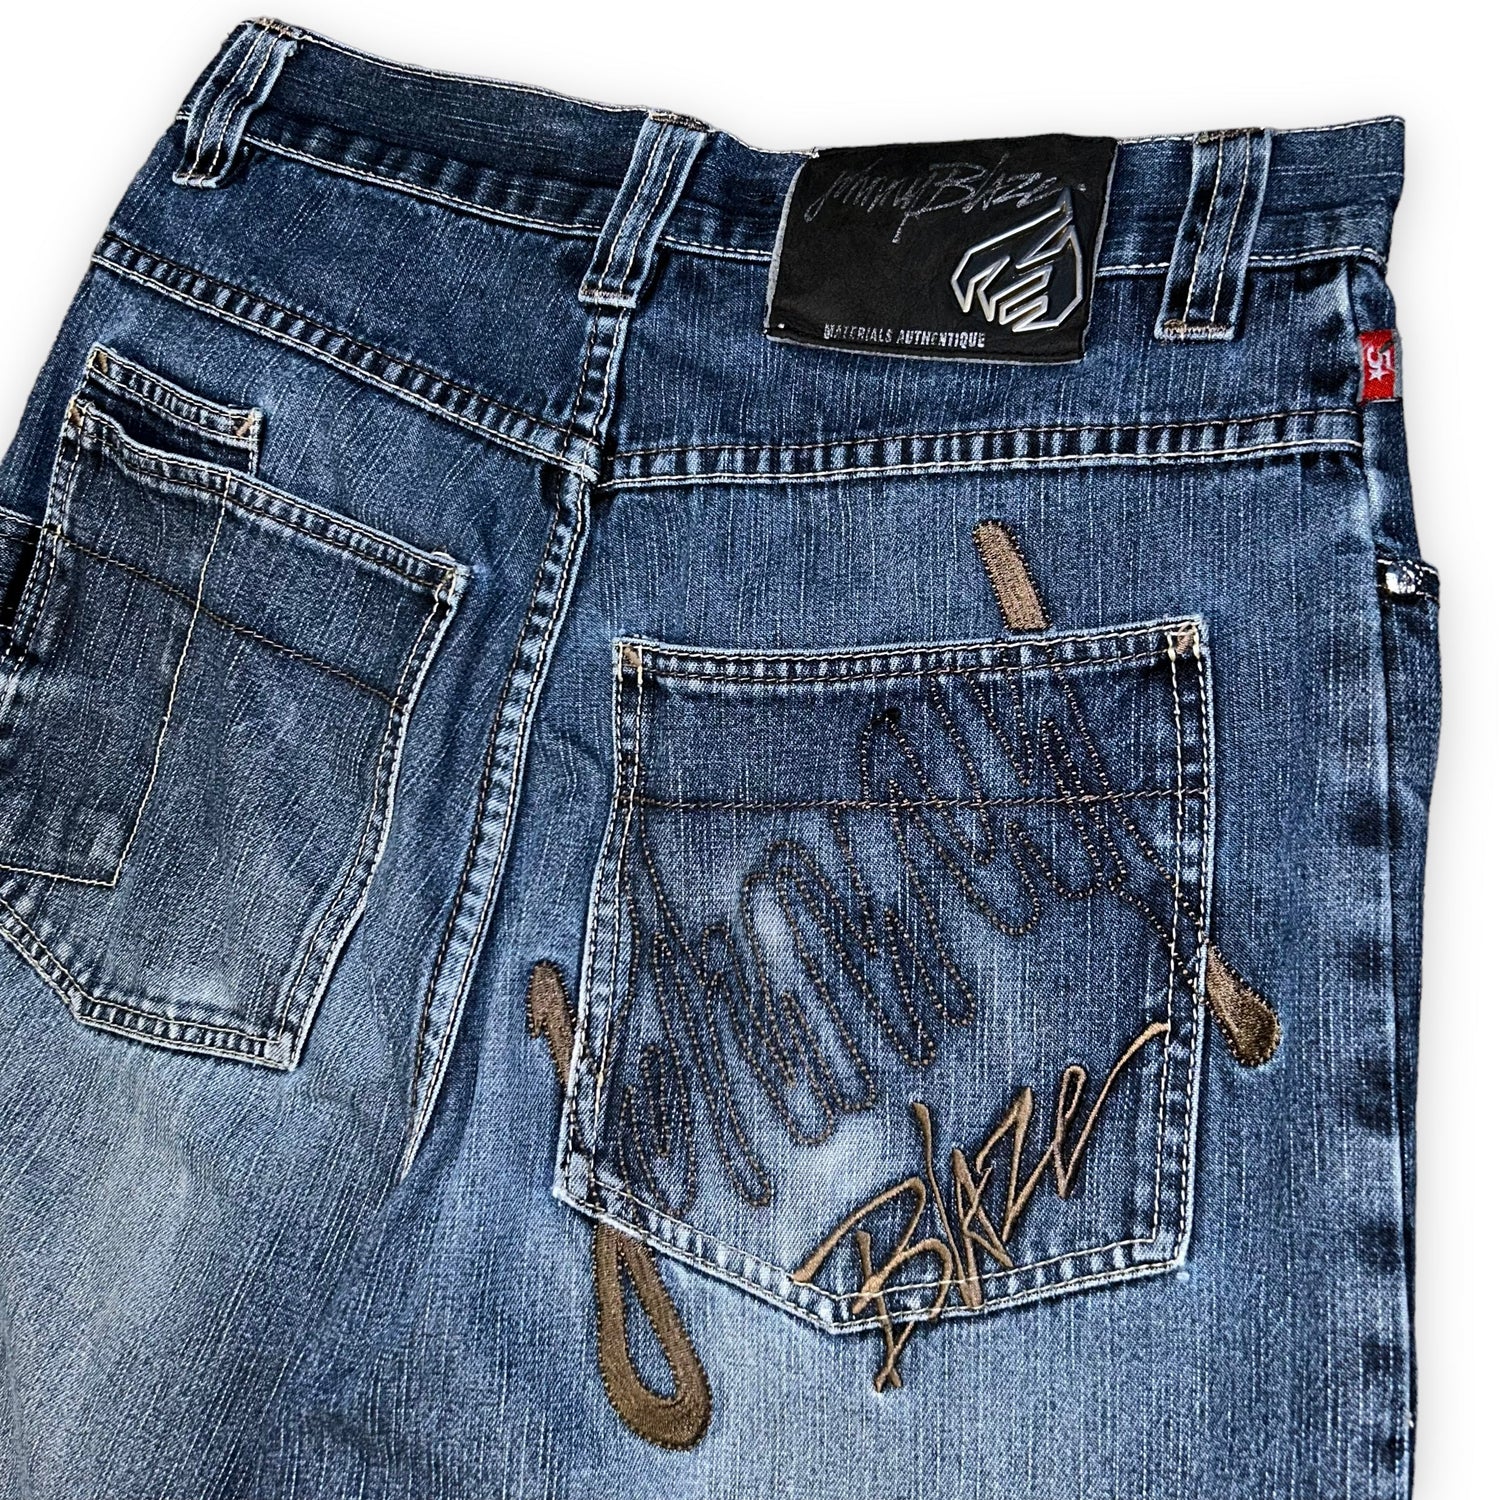 Baggy jeans Johnny Blaze (29 USA XS/S) - oldstyleclothing